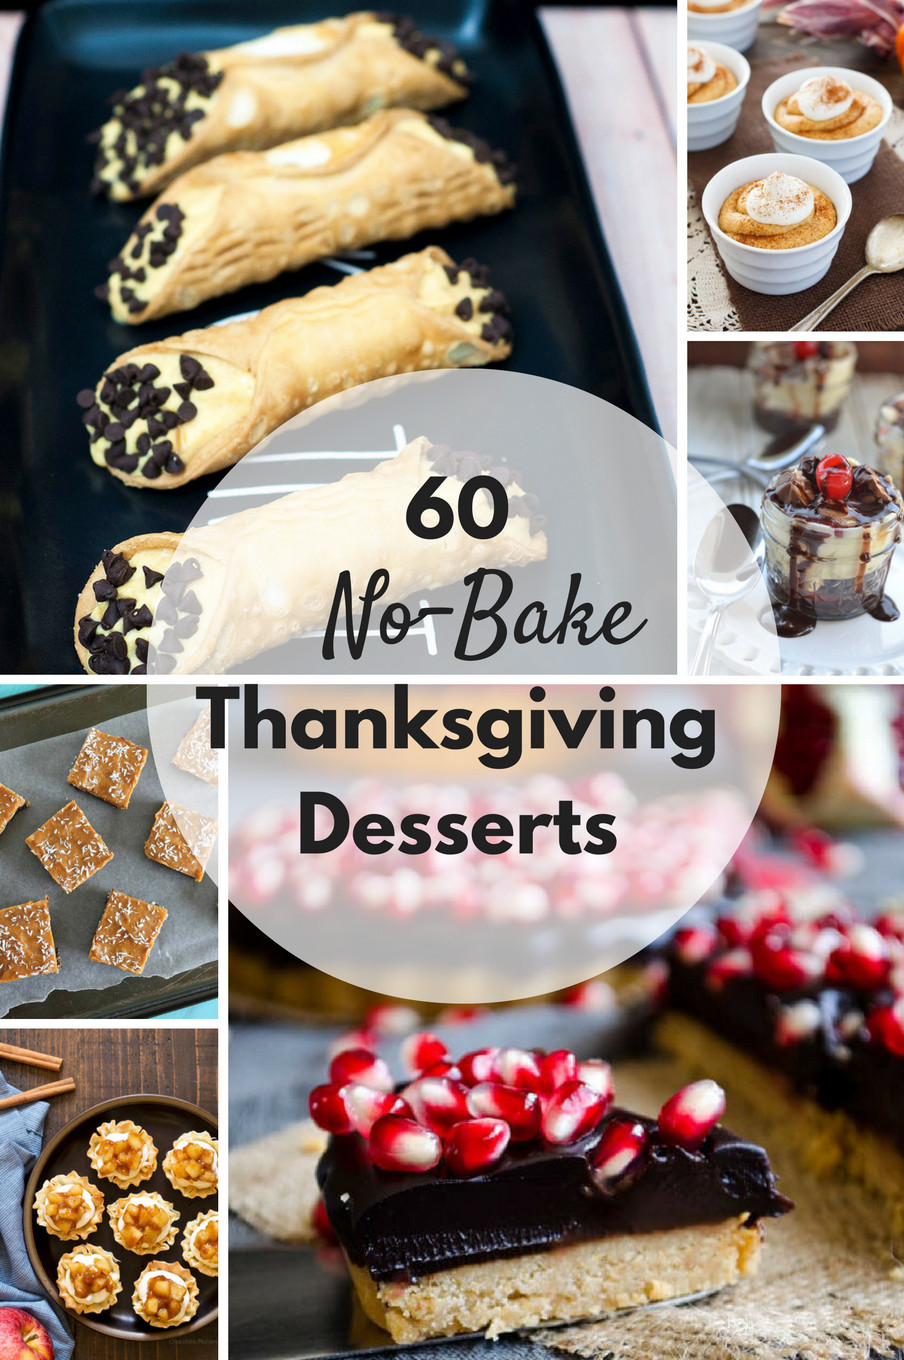 No Bake Thanksgiving Desserts
 60 No Bake Thanksgiving Desserts by The Redhead Baker